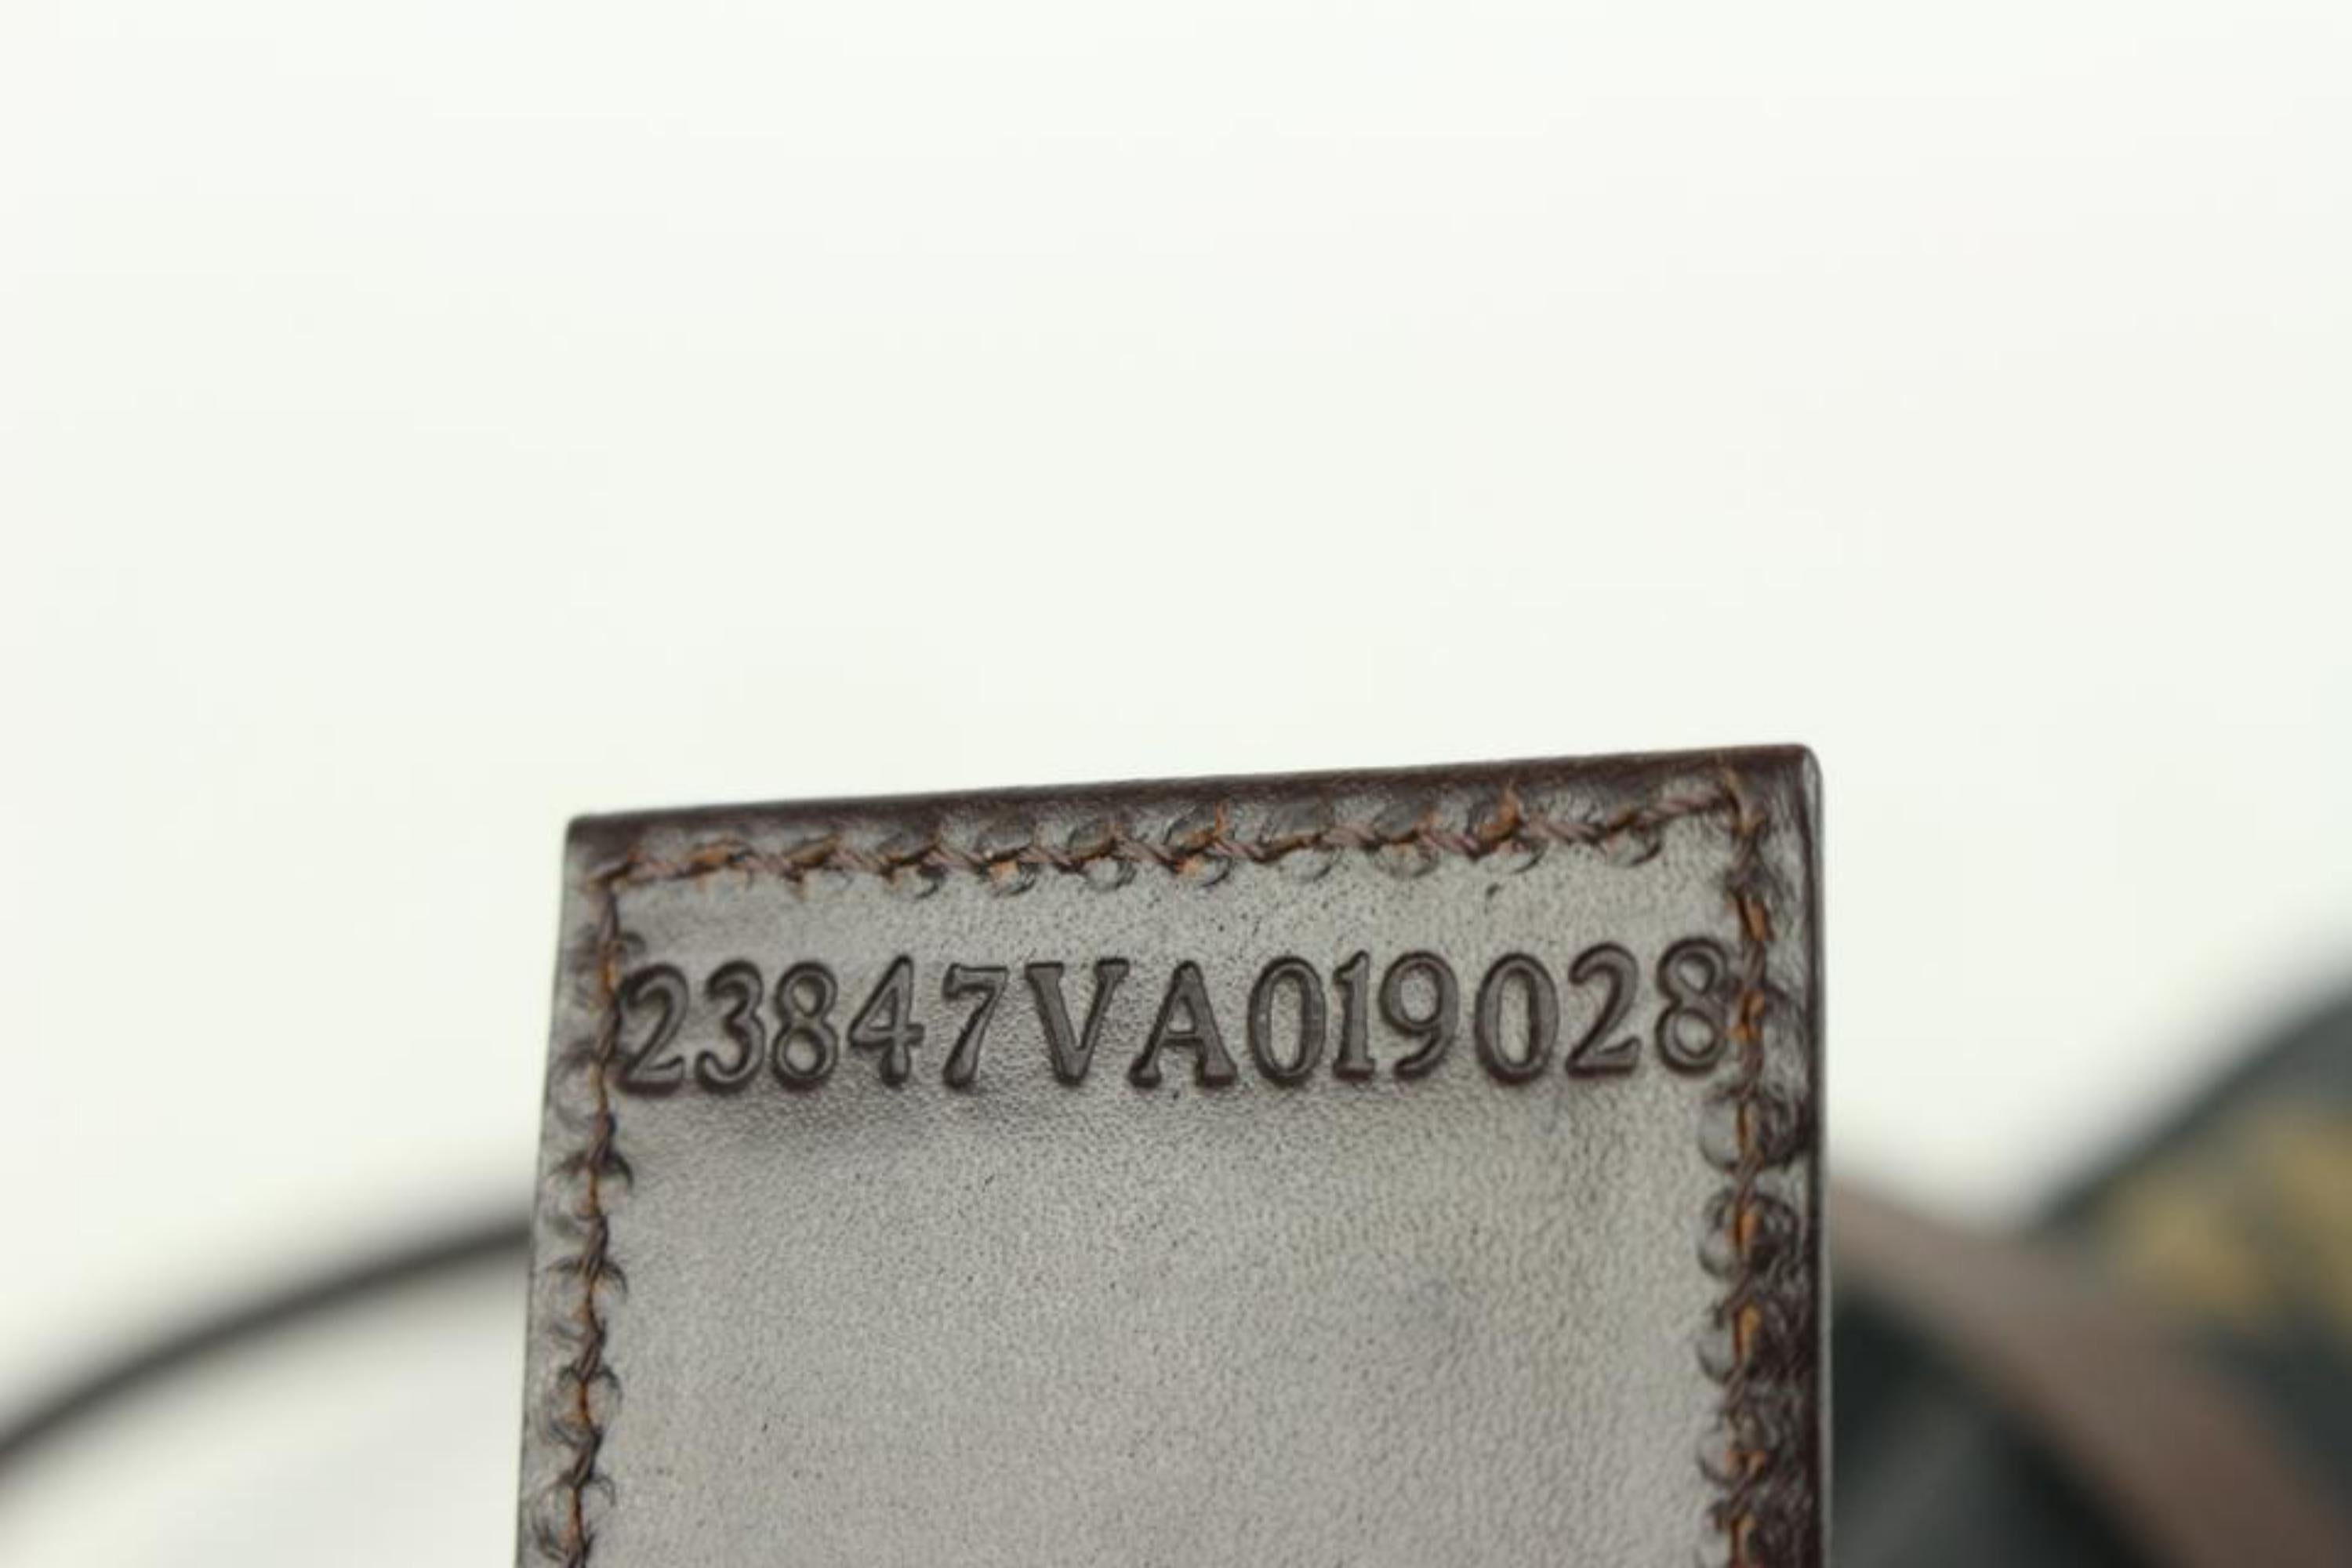 Fendi Black Logo Shopper Tote Bag 104f45 For Sale 4